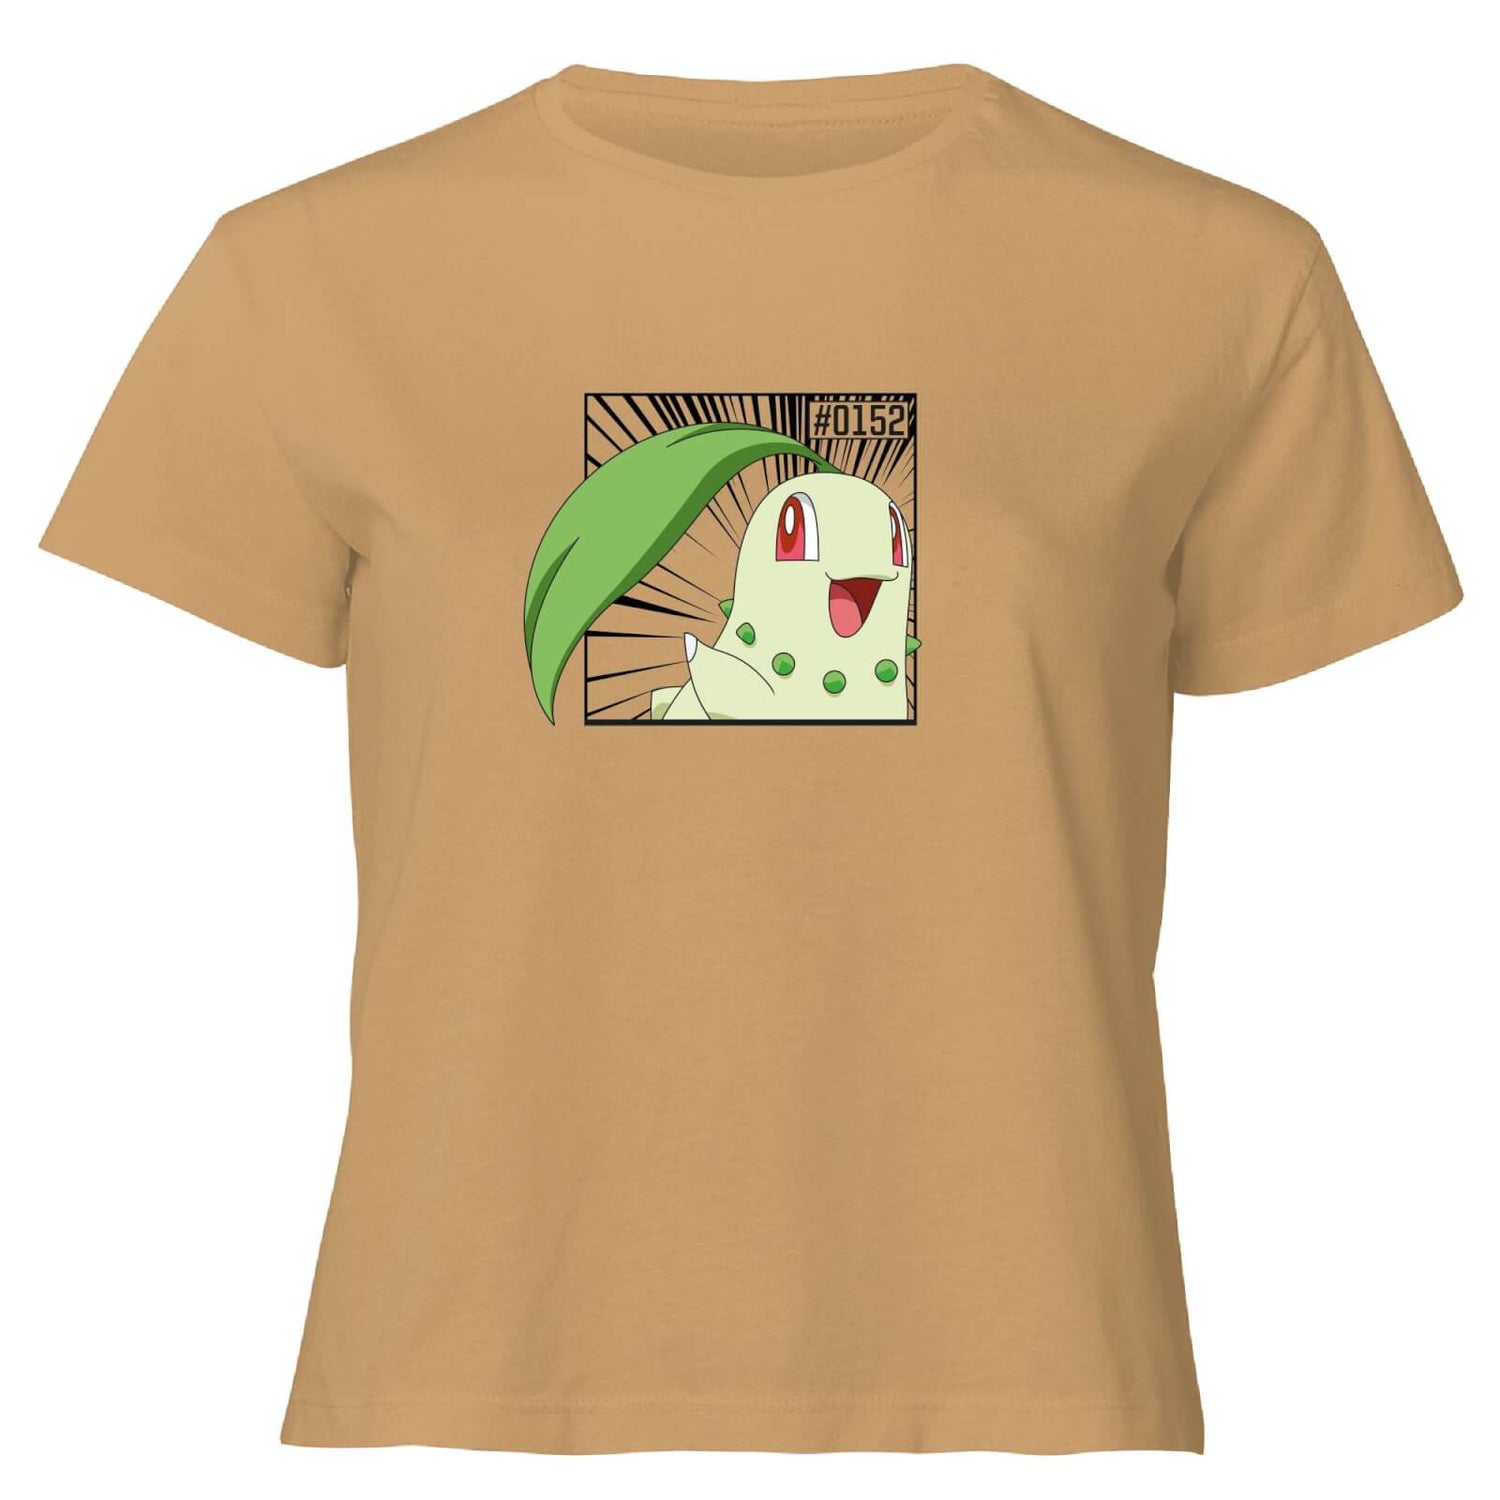 Pokemon Chikorita Women's Cropped T-Shirt - Tan